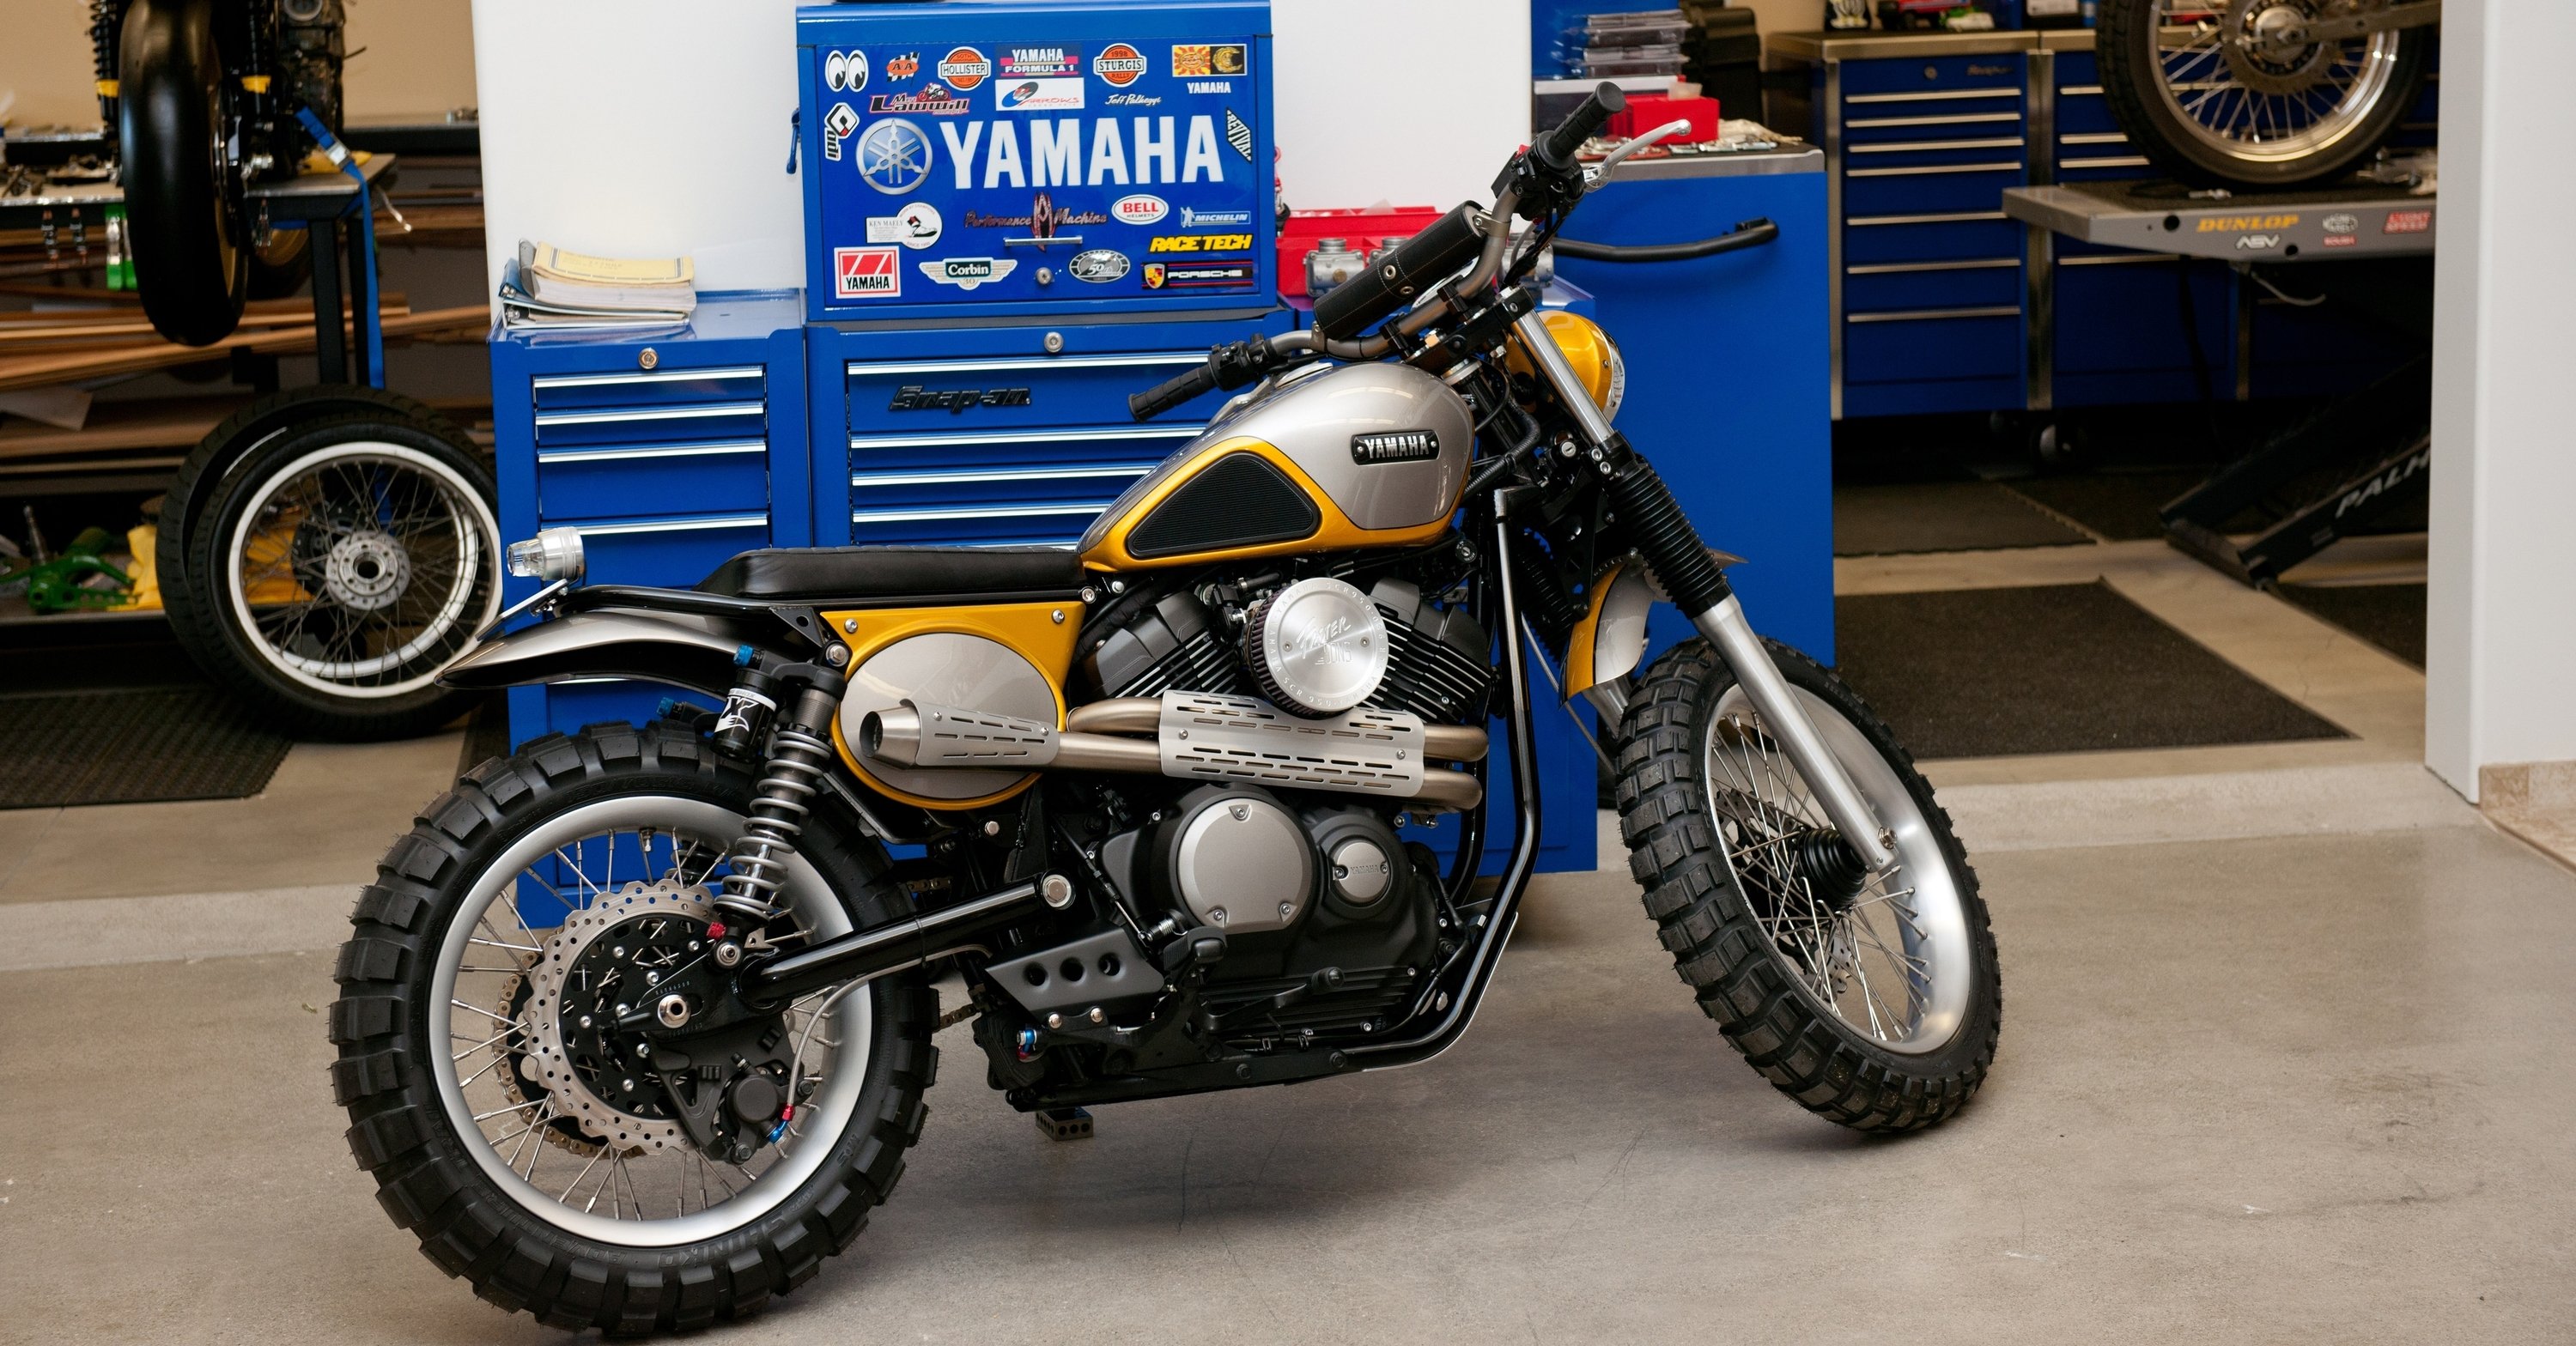 Yamaha SCR950 Yard Built by Jeff Palhegyi